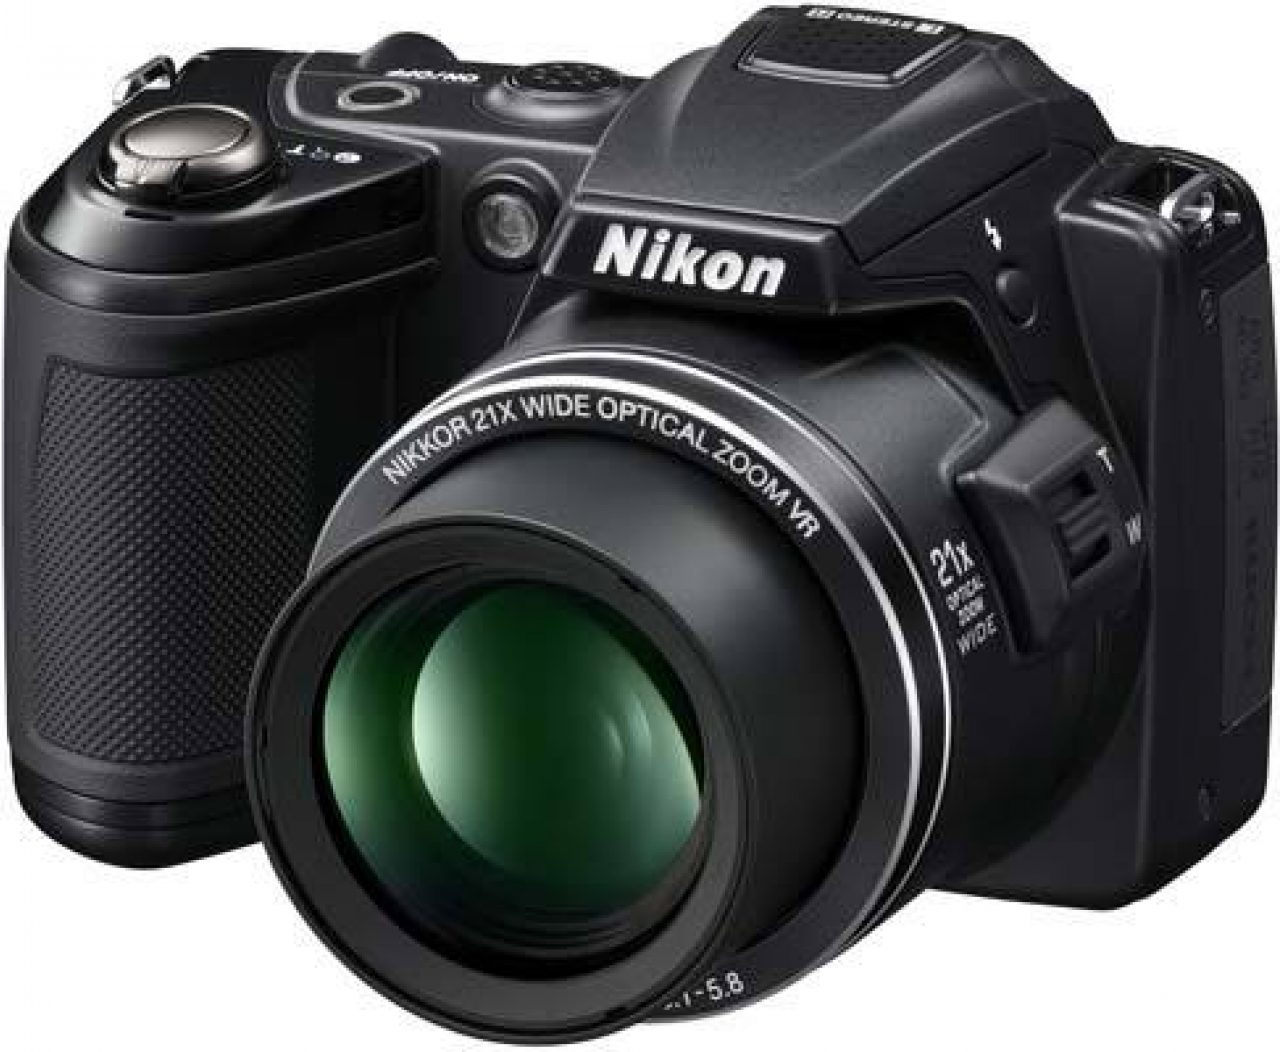 Nikon Coolpix L120 Review | Photography Blog